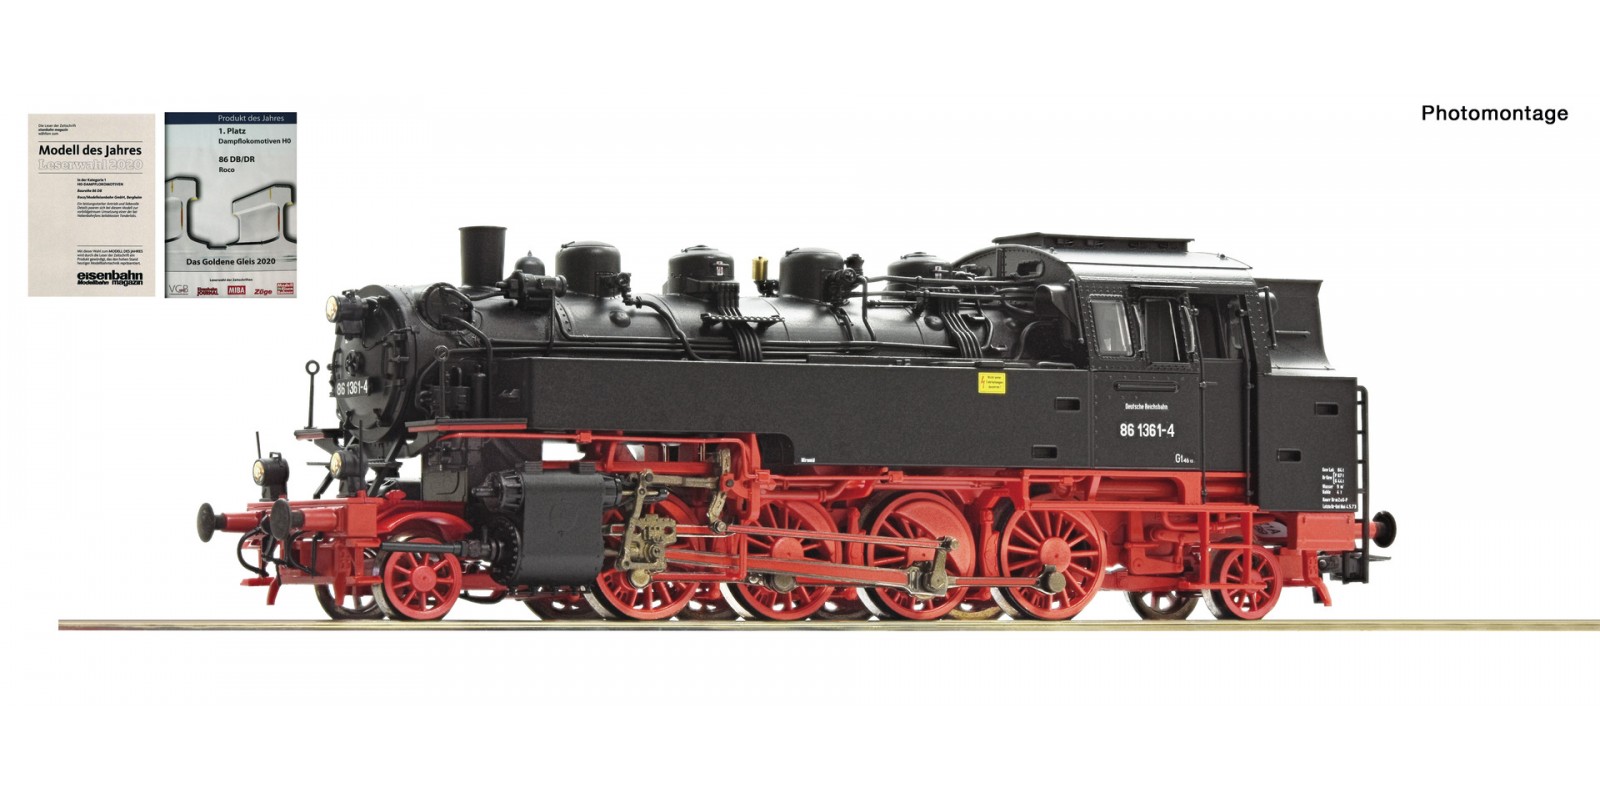 RO73033 Steam locomotive 86 1361-4